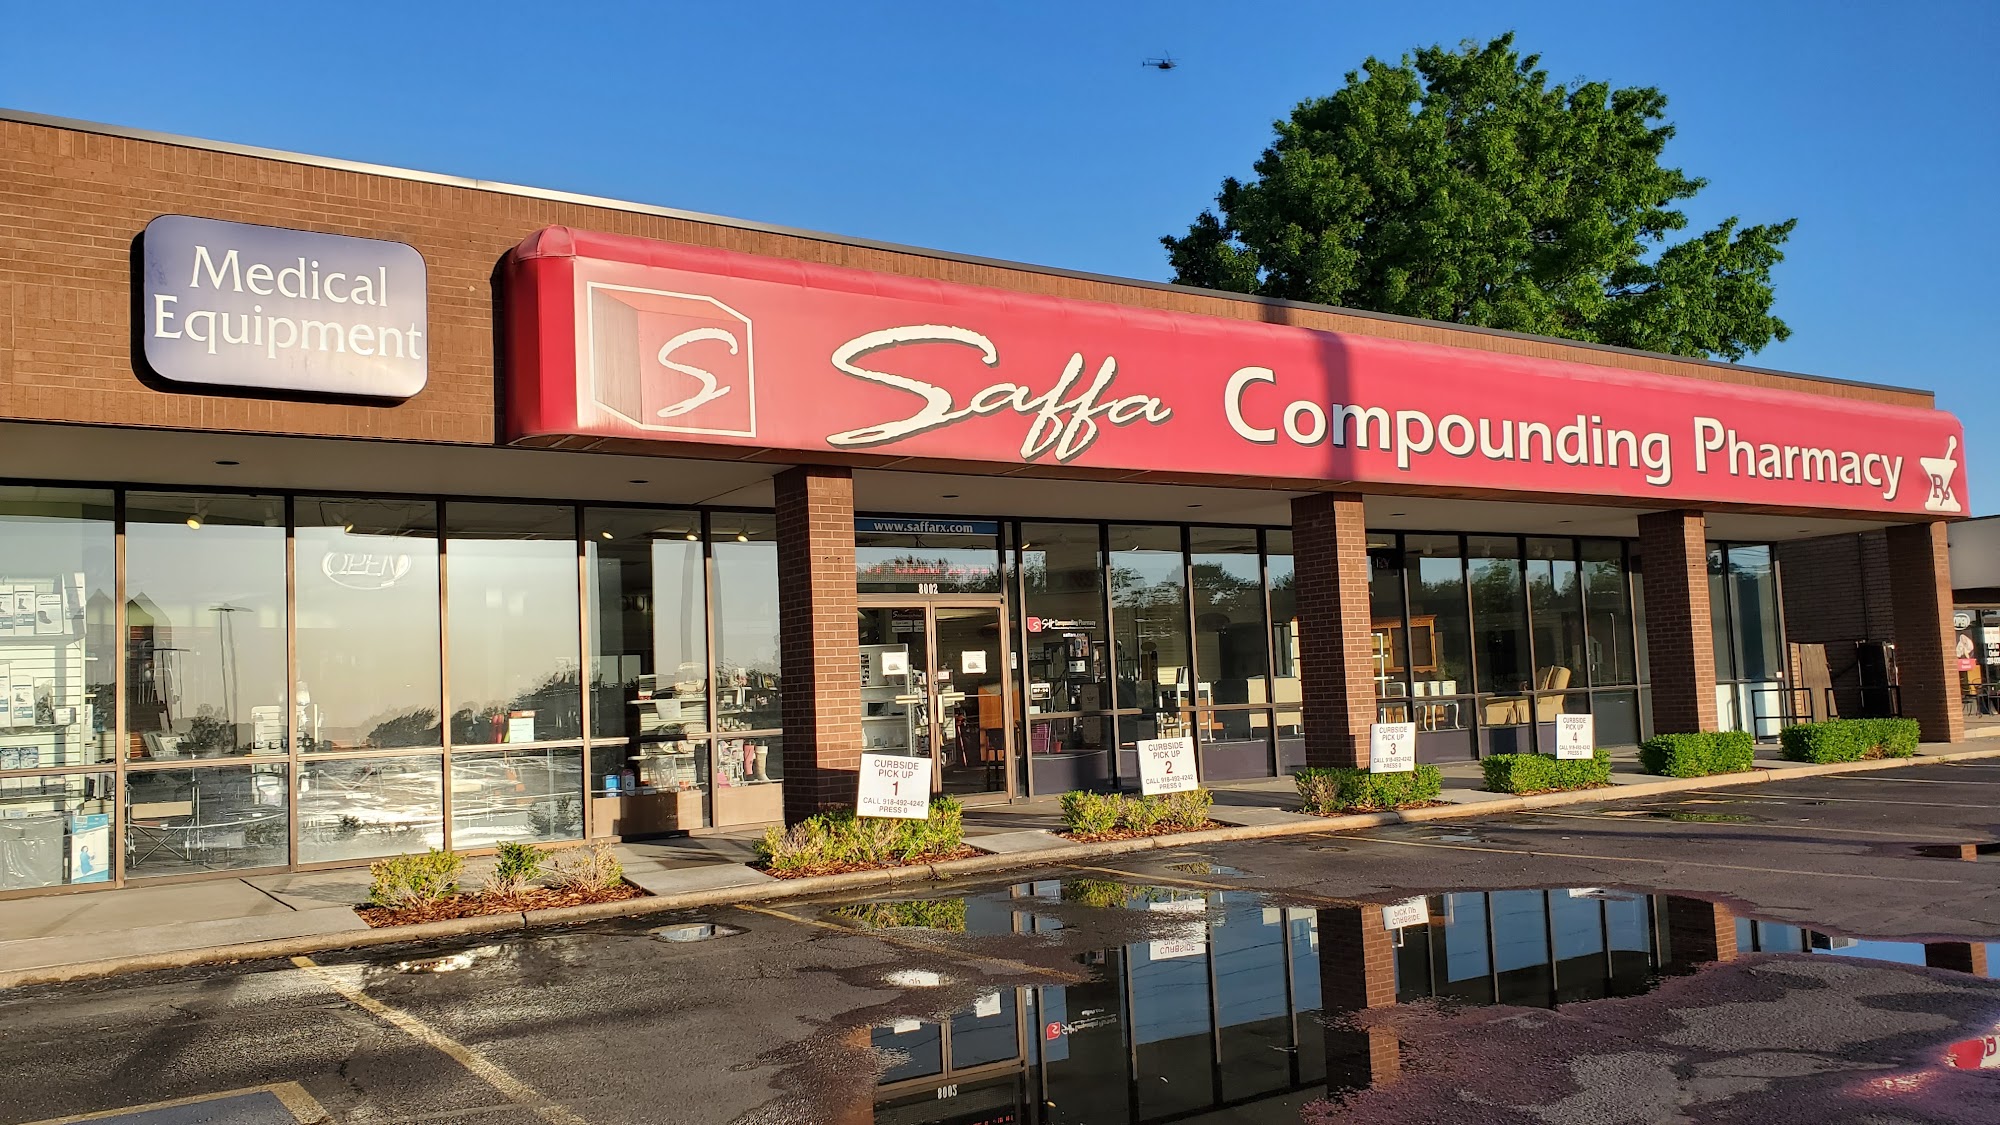 Saffa Compounding Pharmacy